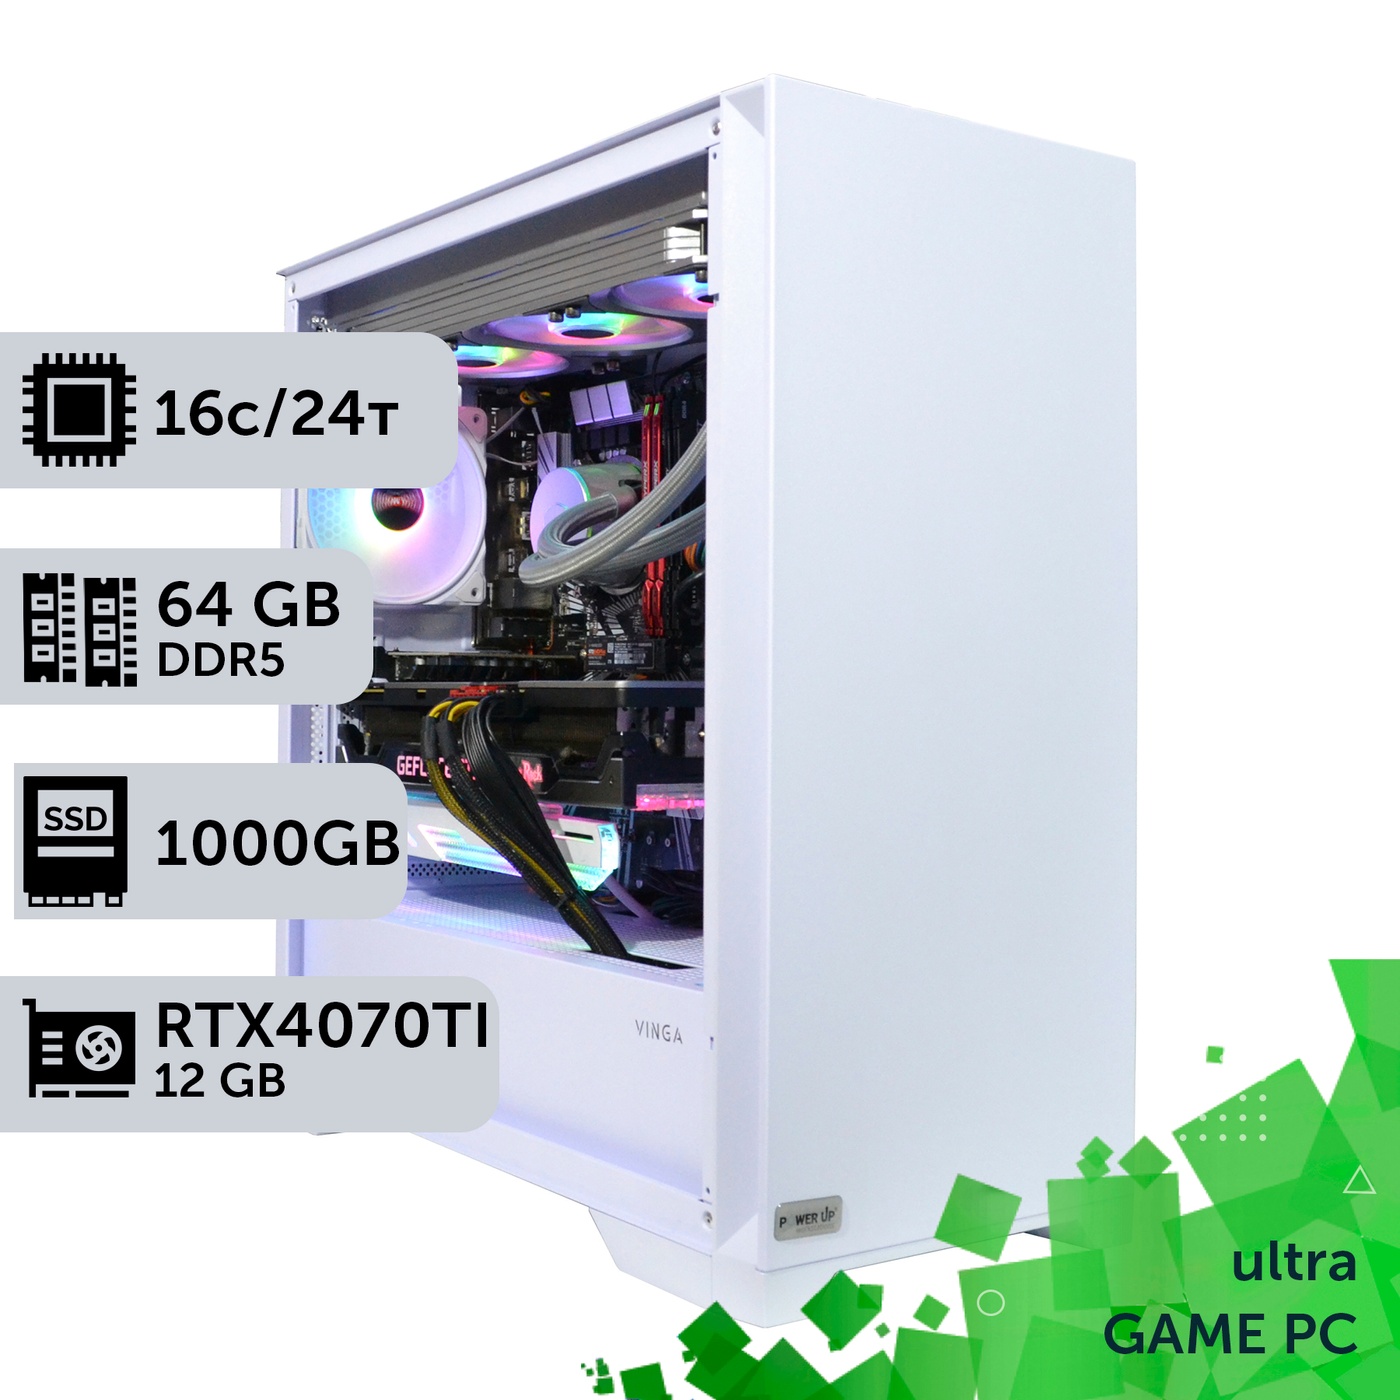 Игровой компьютер GamePC Ultra #239 Core i7 13700F/64 GB/SSD 1TB/GeForce RTX 4070Ti 12GB